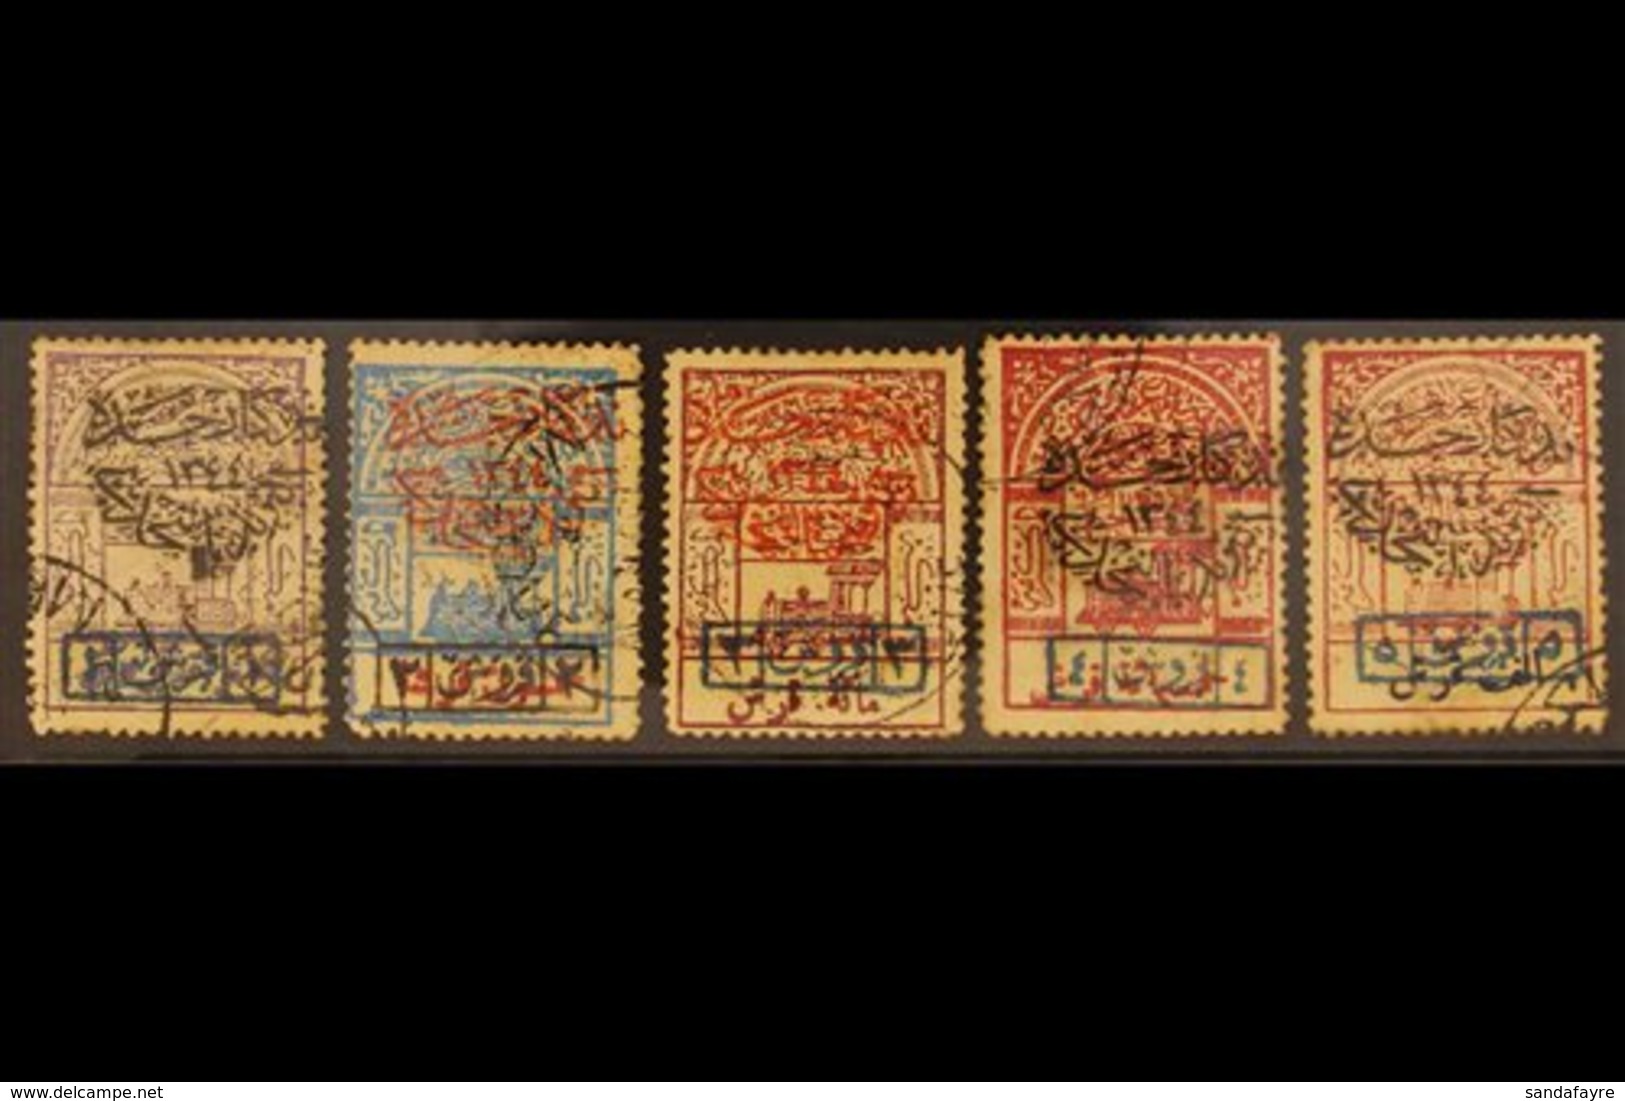 1925 (23 DEC) Capture Of Jeddah Complete Handstamped Set On Railway Tax Stamps, SG 249/253, Cto Used With Gum Toning, 2p - Saudi-Arabien